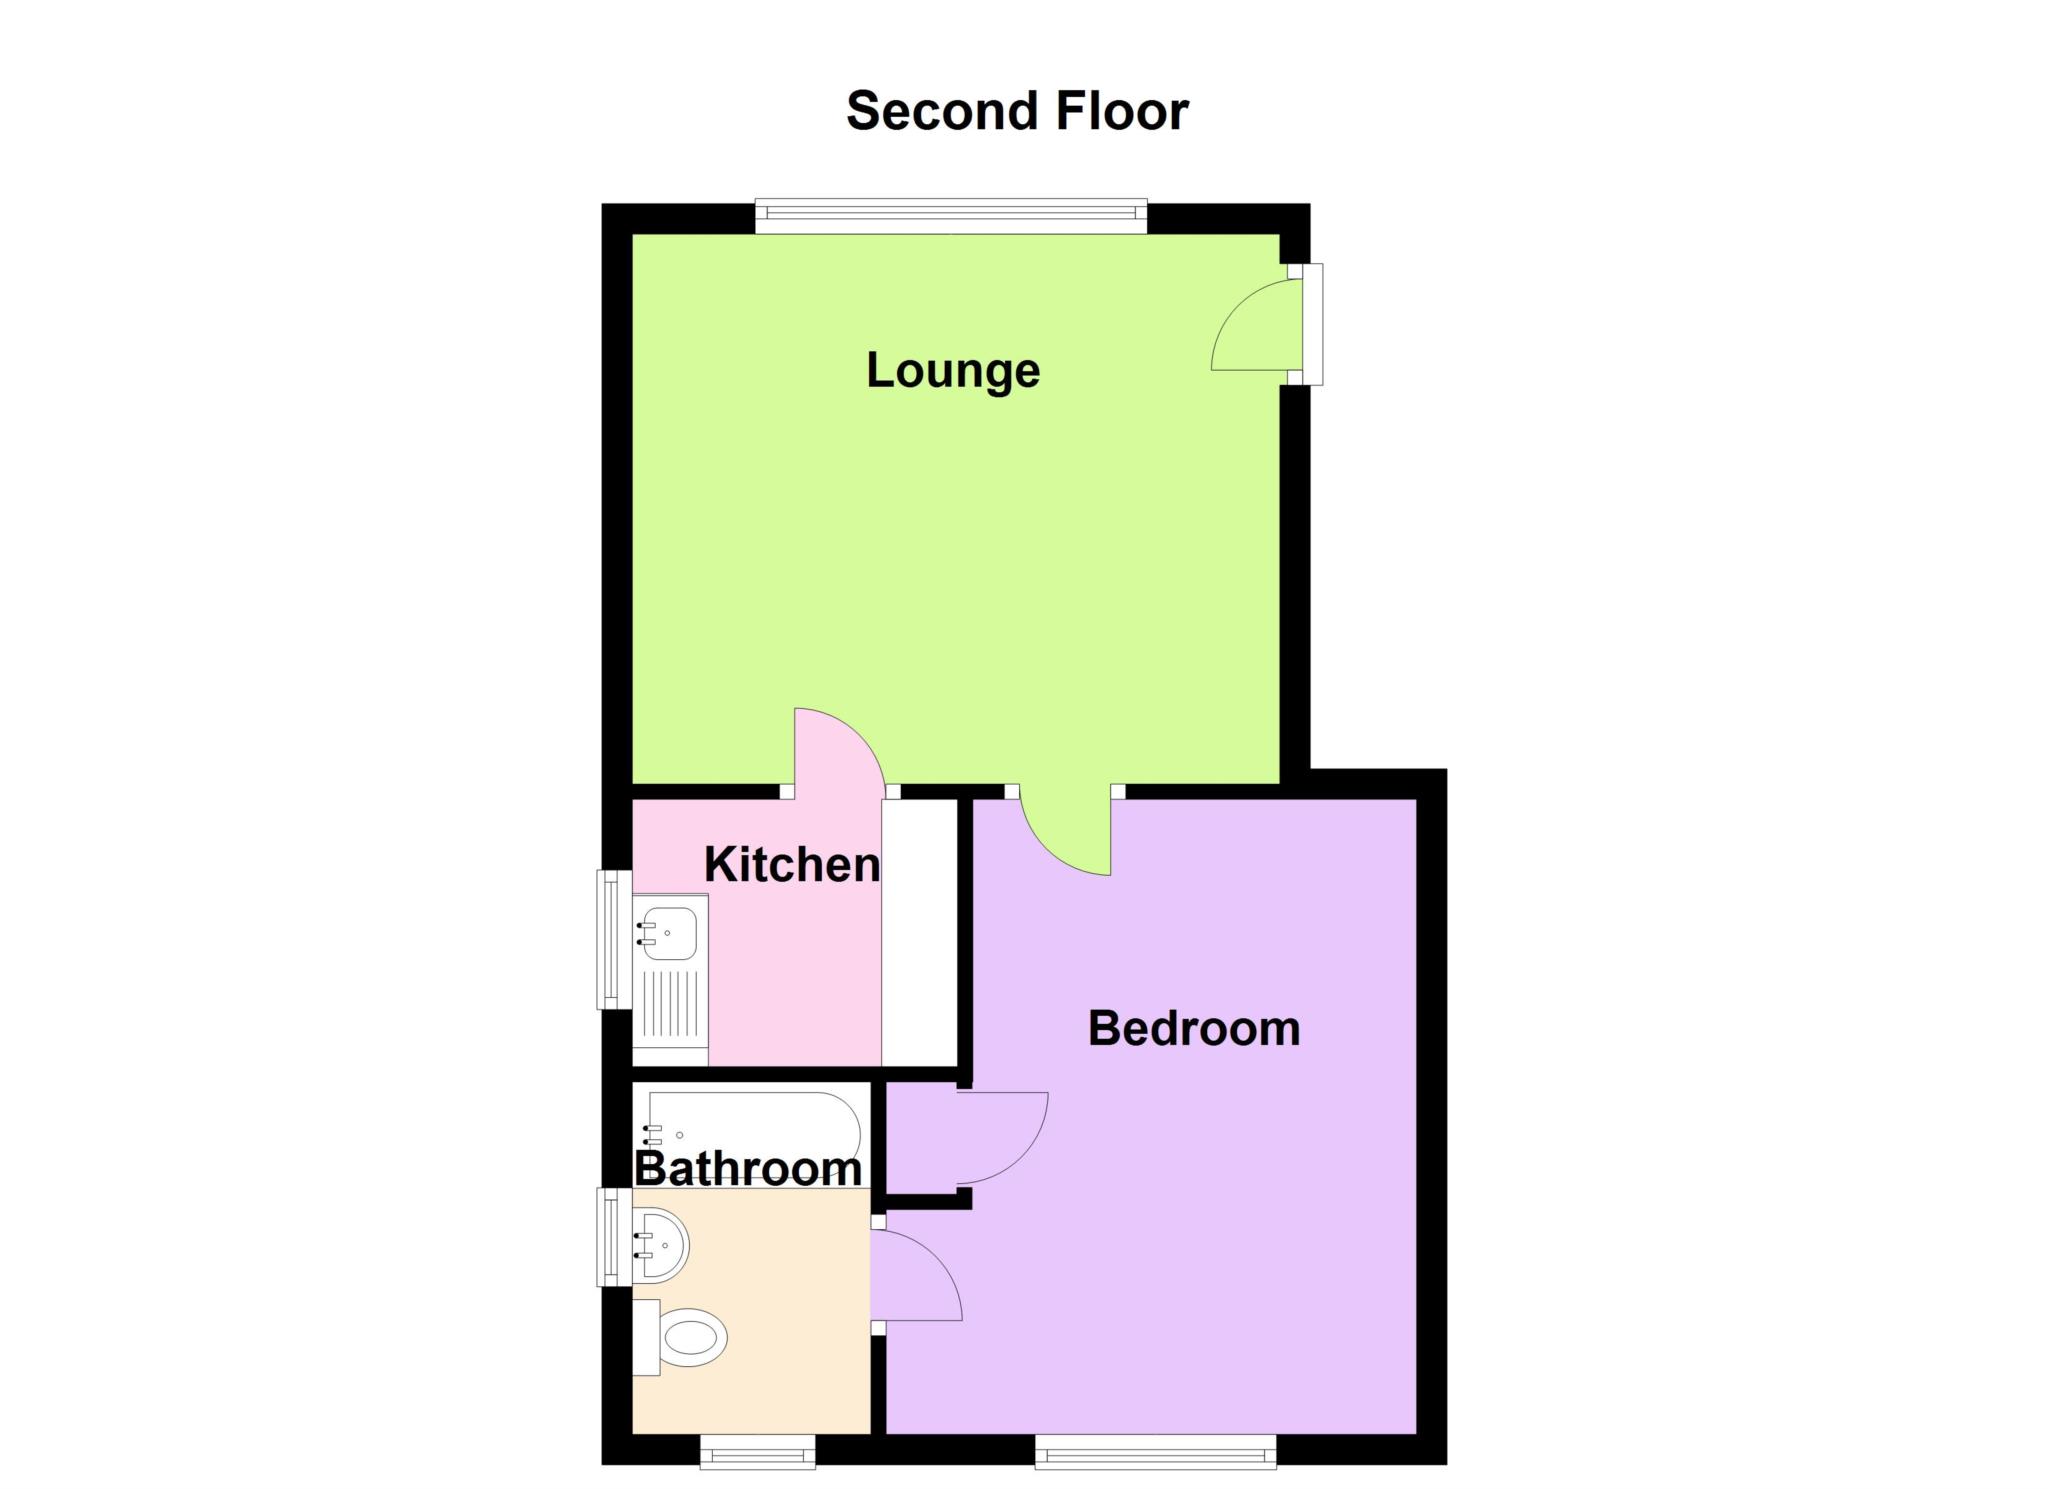 Image of the Floorplan